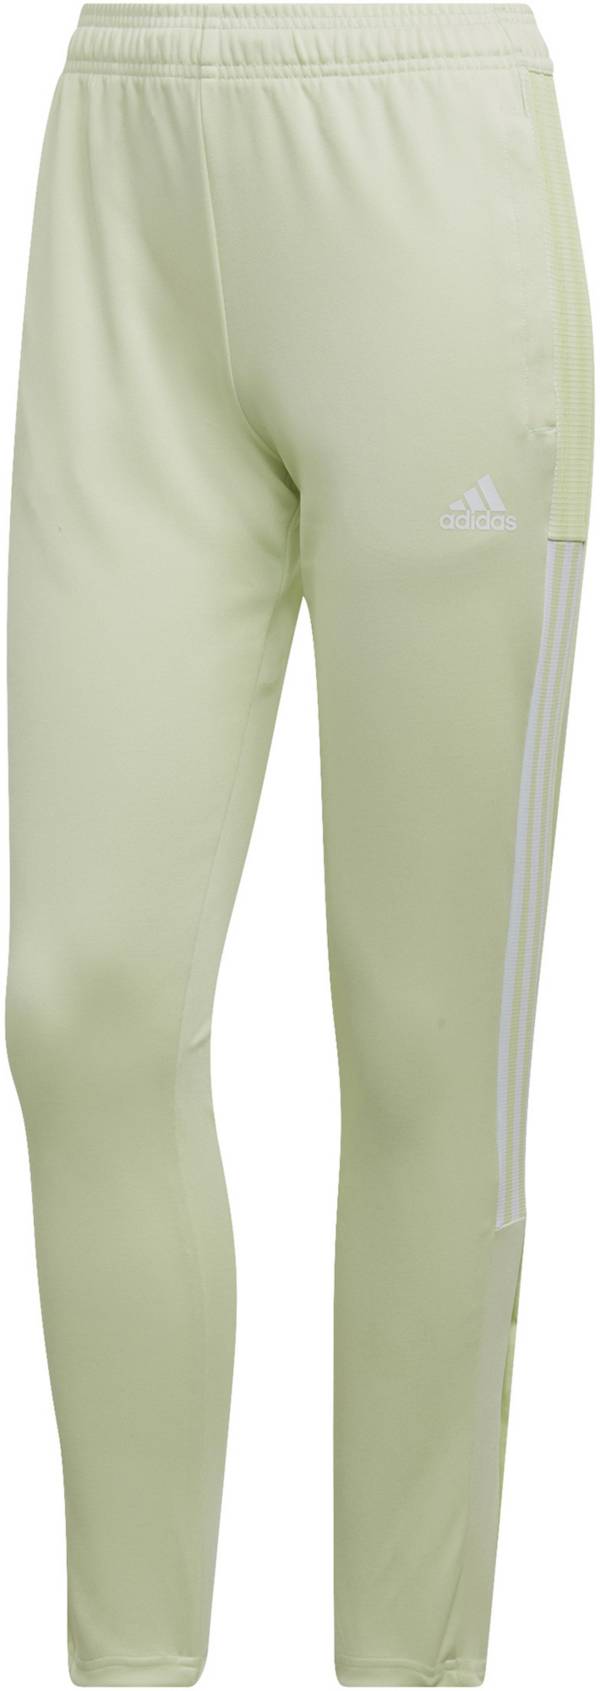 adidas Boys' Tiro Colorblock Pants product image